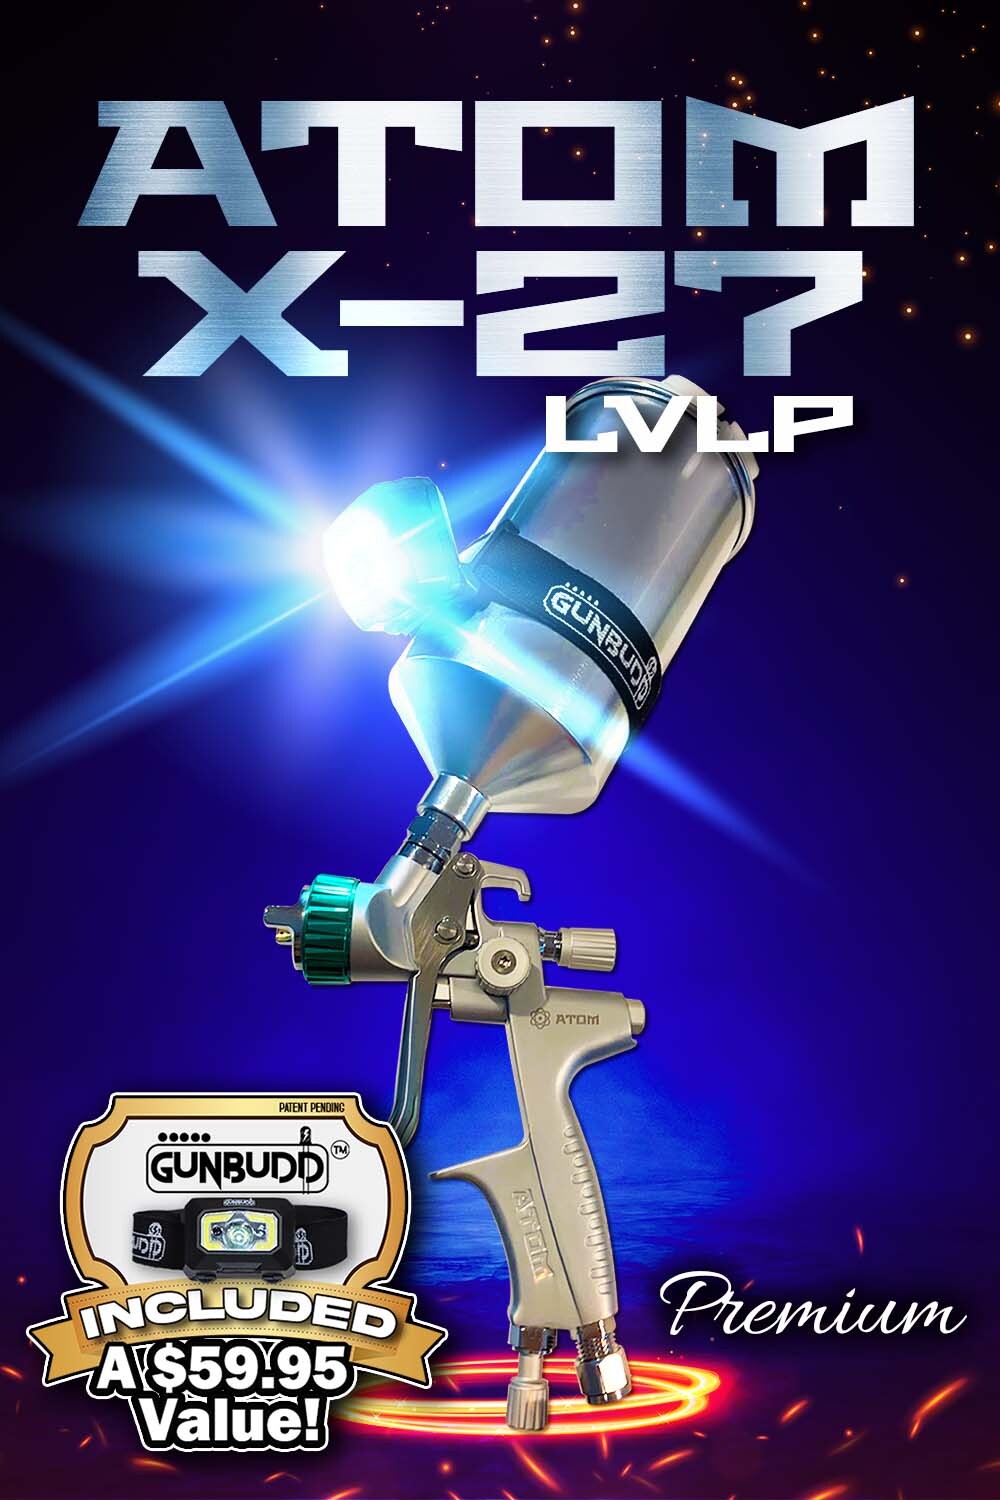 ATOM X27 Professional Spray Gun - MP LVLP Solvent/Waterborne w/ GunBudd® Ultra Lighting System